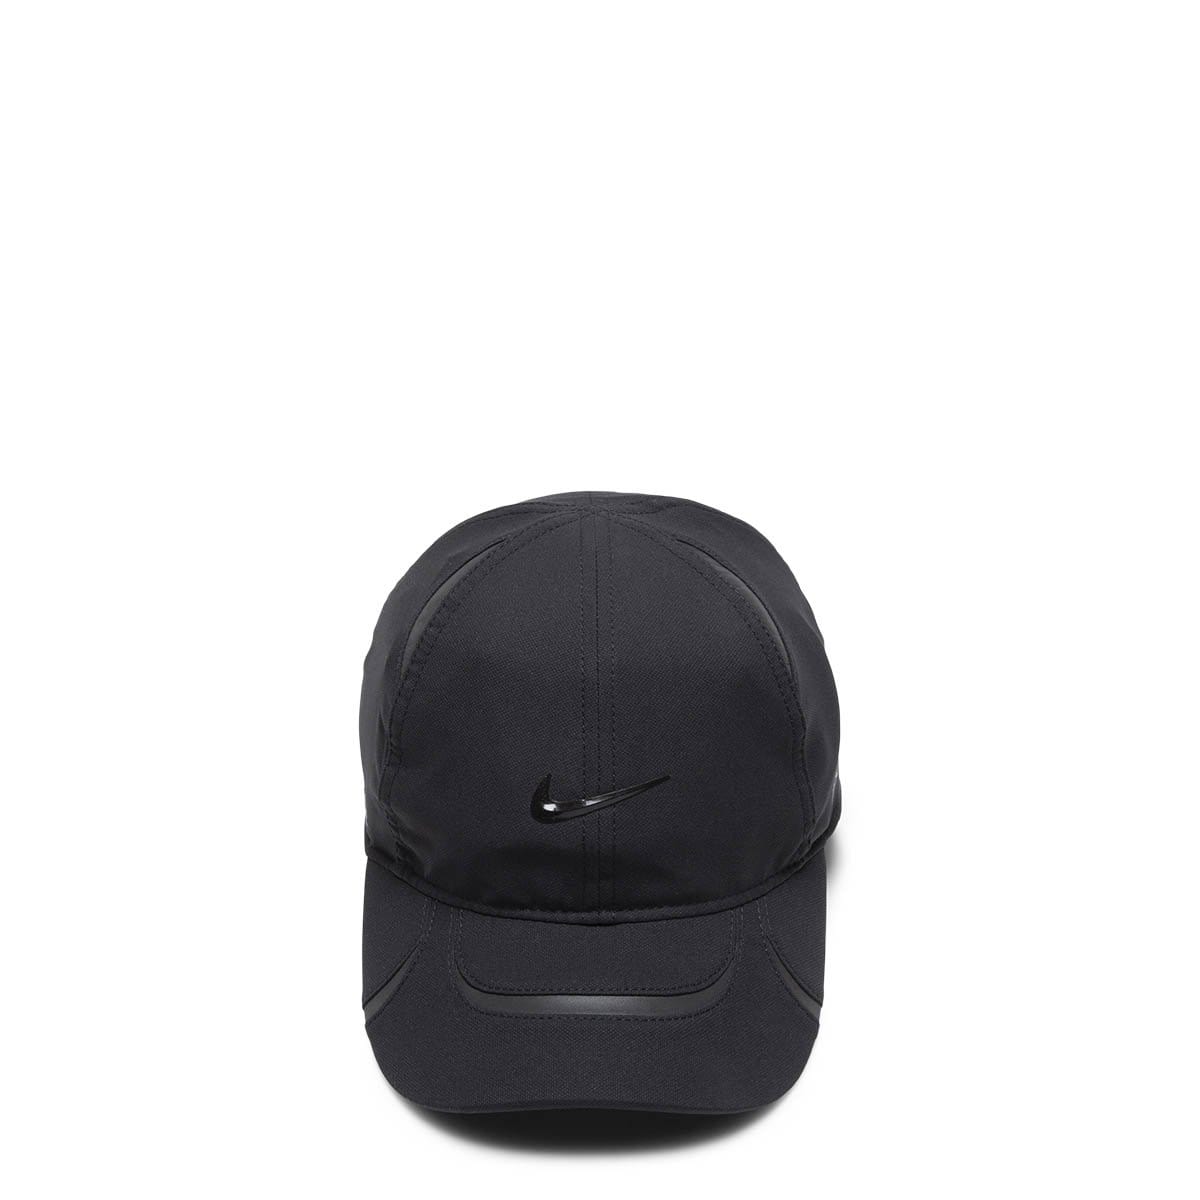 Nike Headwear Black/Chrome [010] / OS NOCTA NRG AU CAP